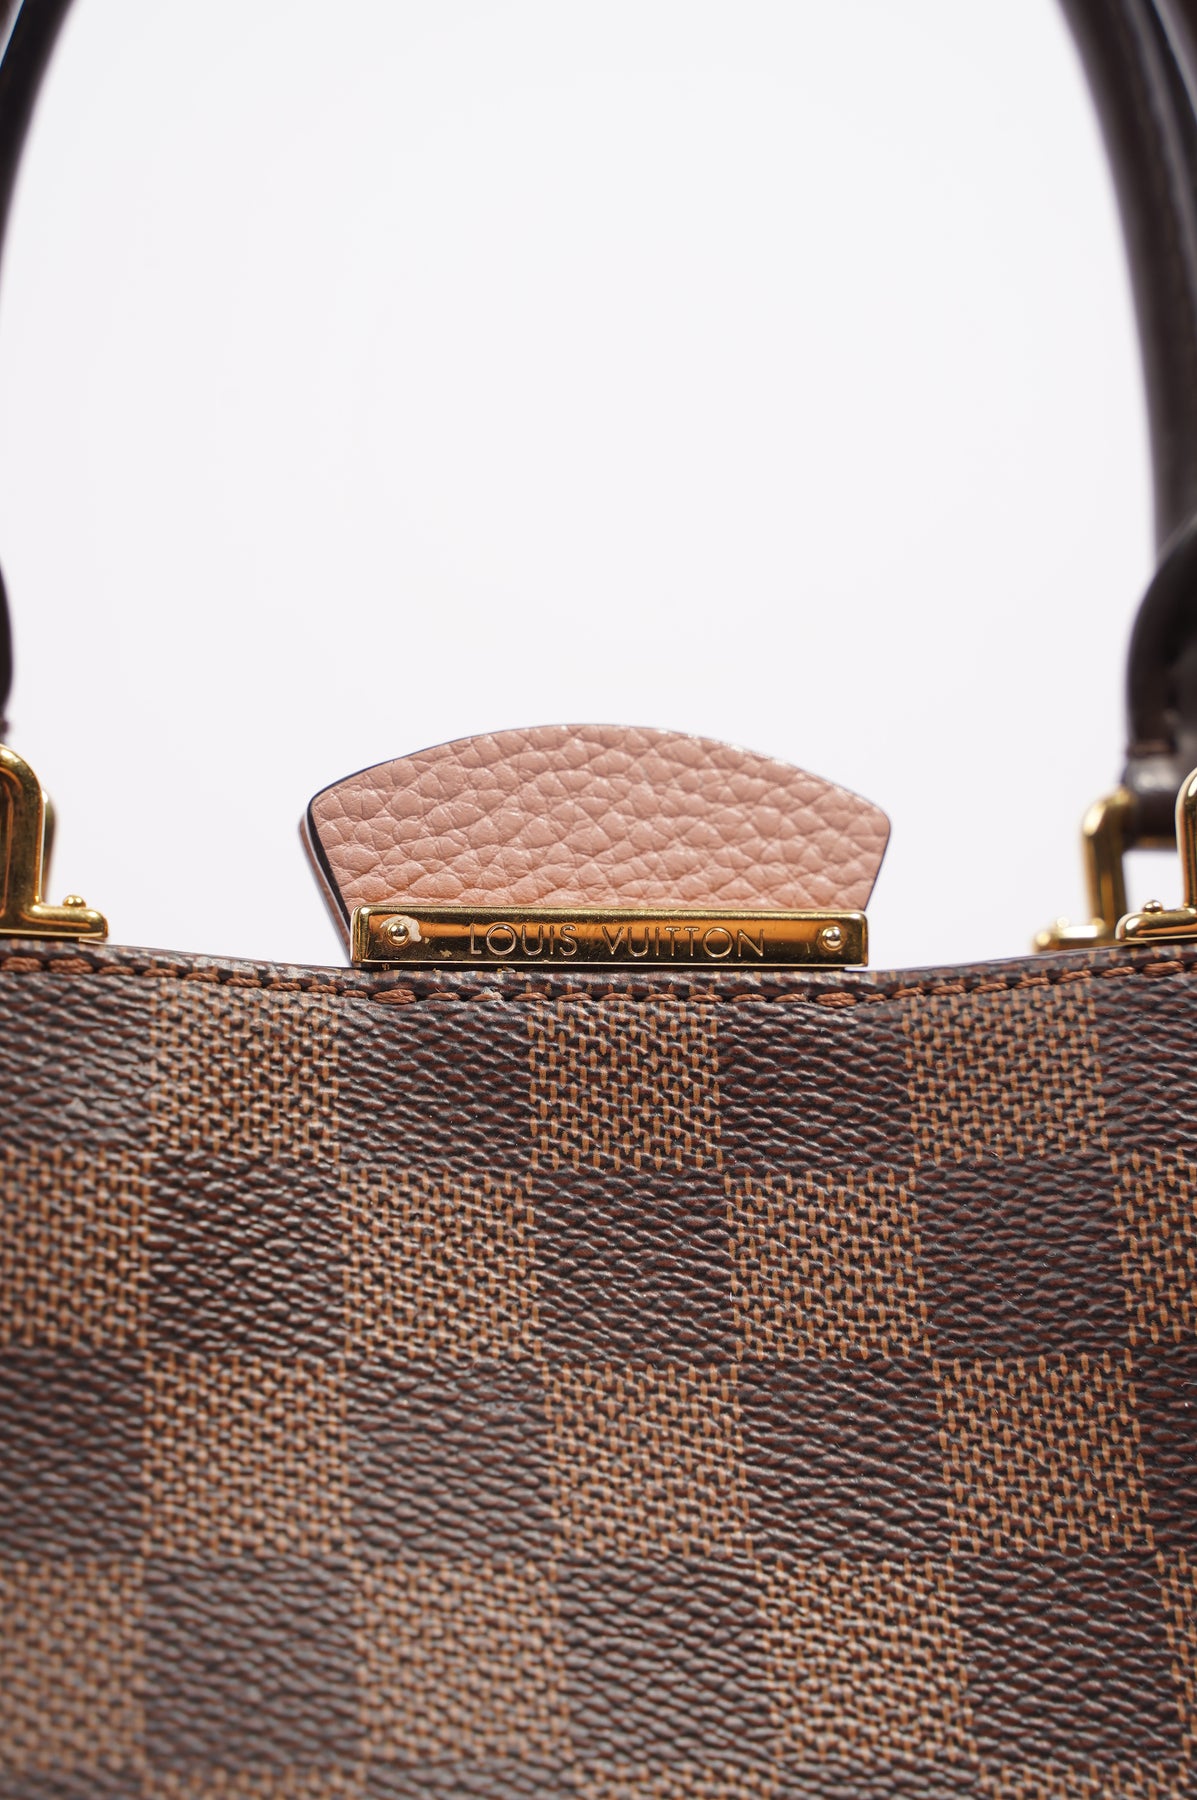 Brittany Damier Ebene – Keeks Designer Handbags